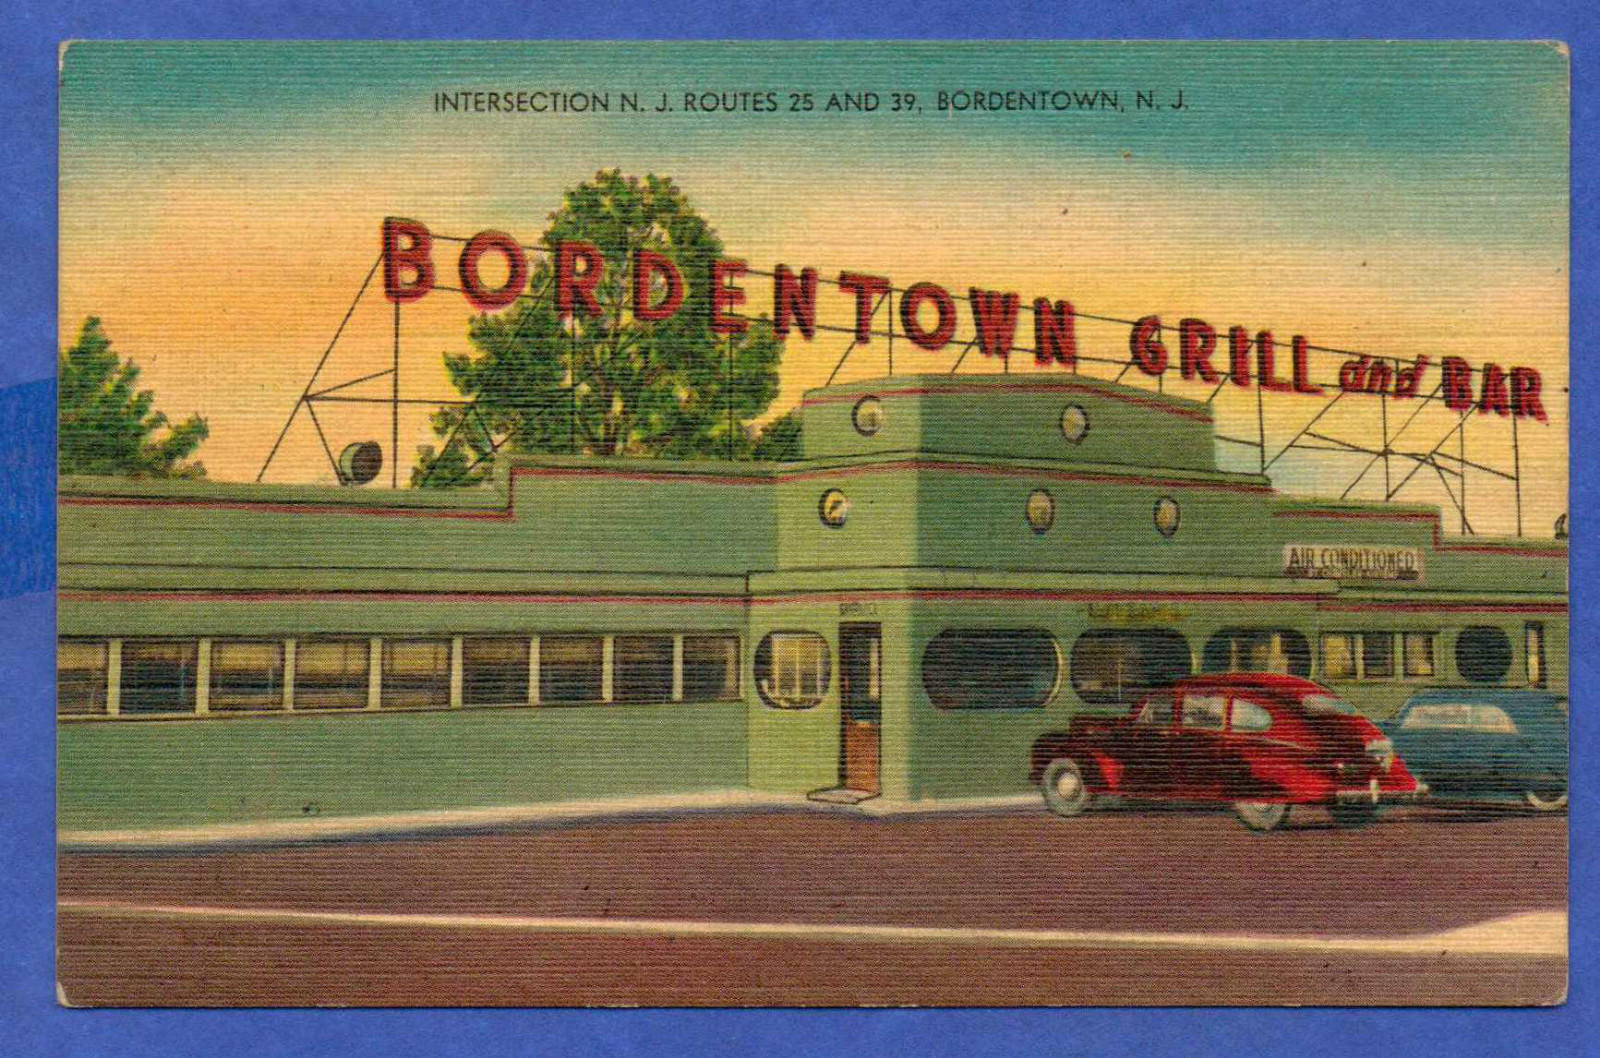 Bordentown - Bordentown grill and Bar - 1933